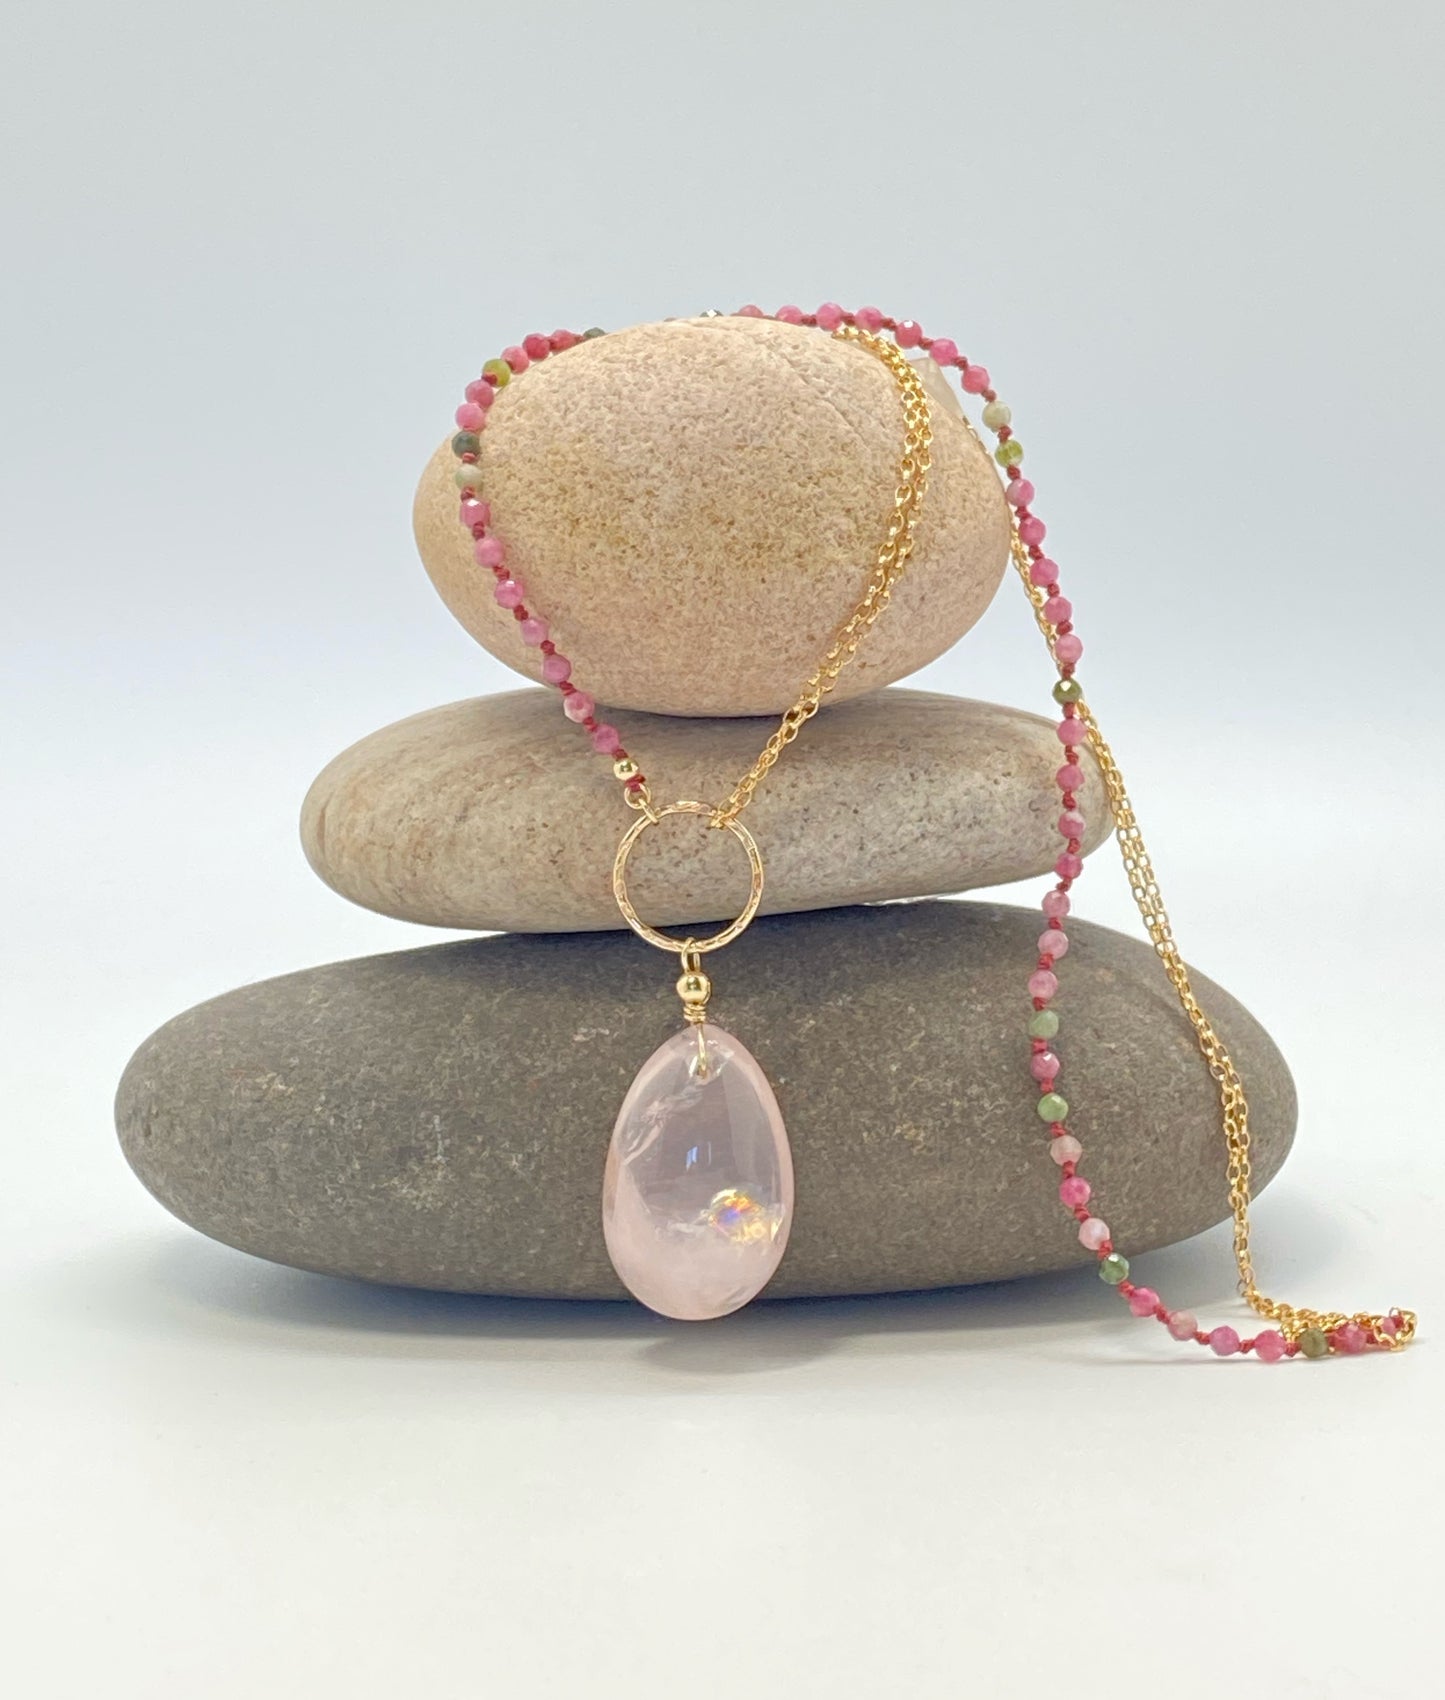 Yin & Yang Pink Pendant Necklace